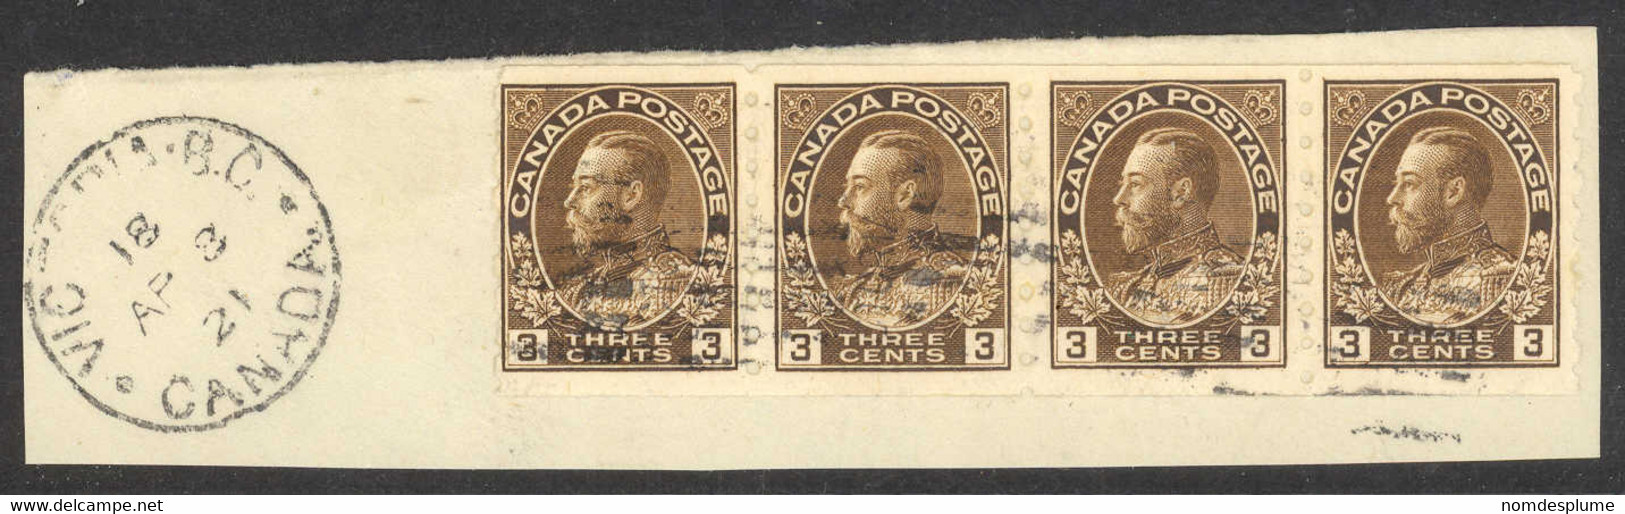 1475) Canada 129 George  V Admiral Coil 1918 Victoria BC  Fold - Coil Stamps